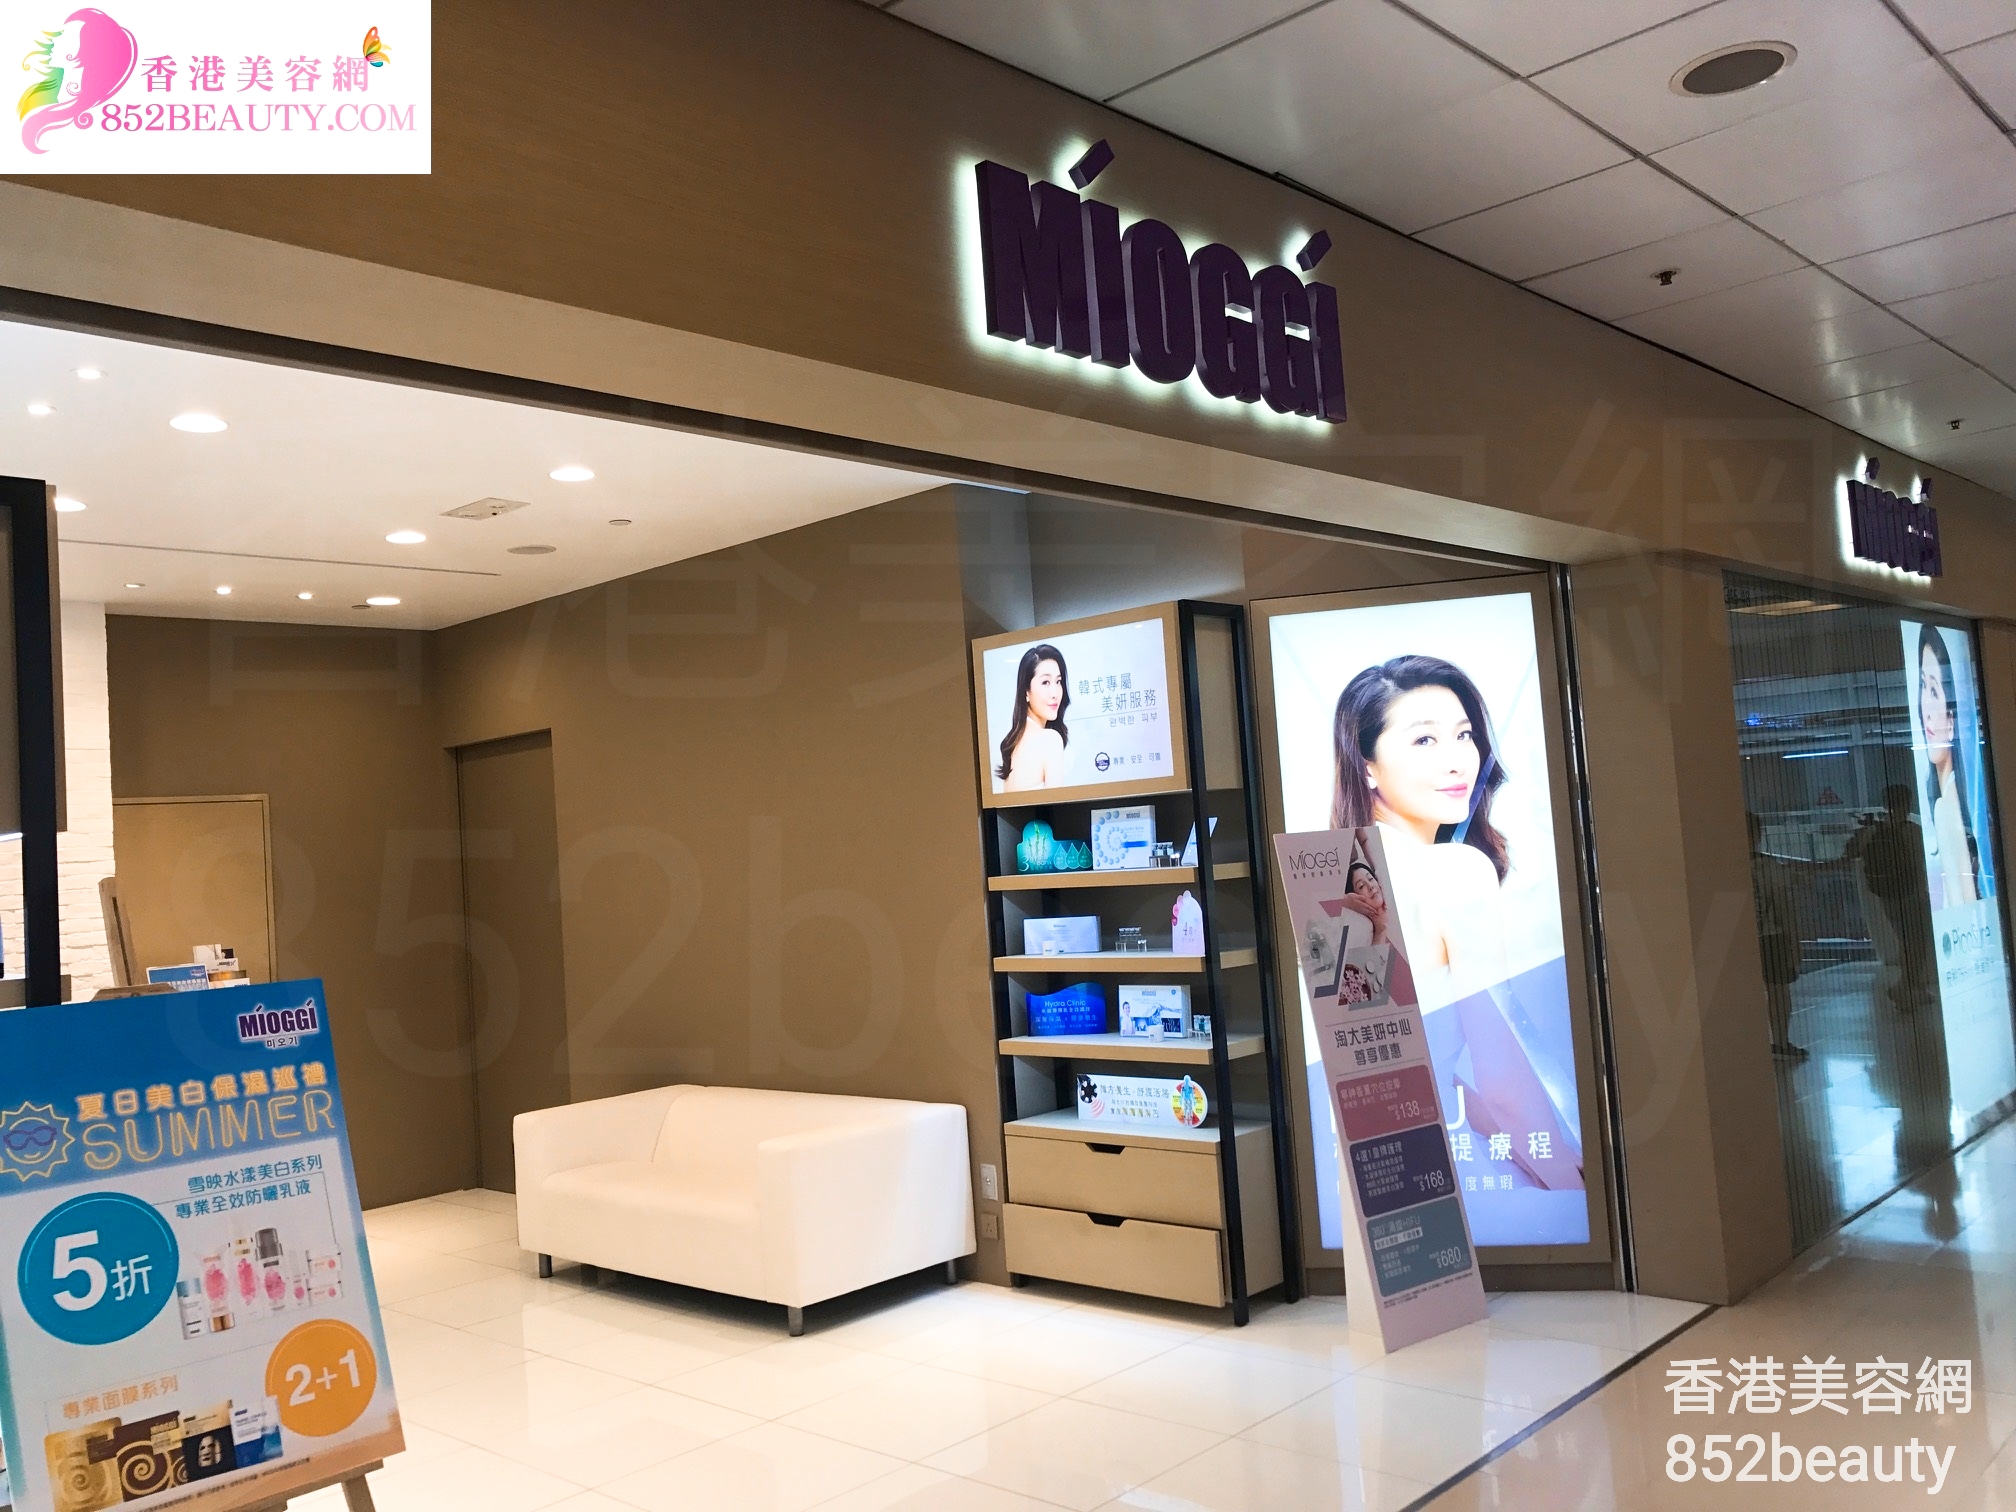 美容院 Beauty Salon 集團MIOGGI Beauty (We Go Mall) @ 香港美容網 HK Beauty Salon